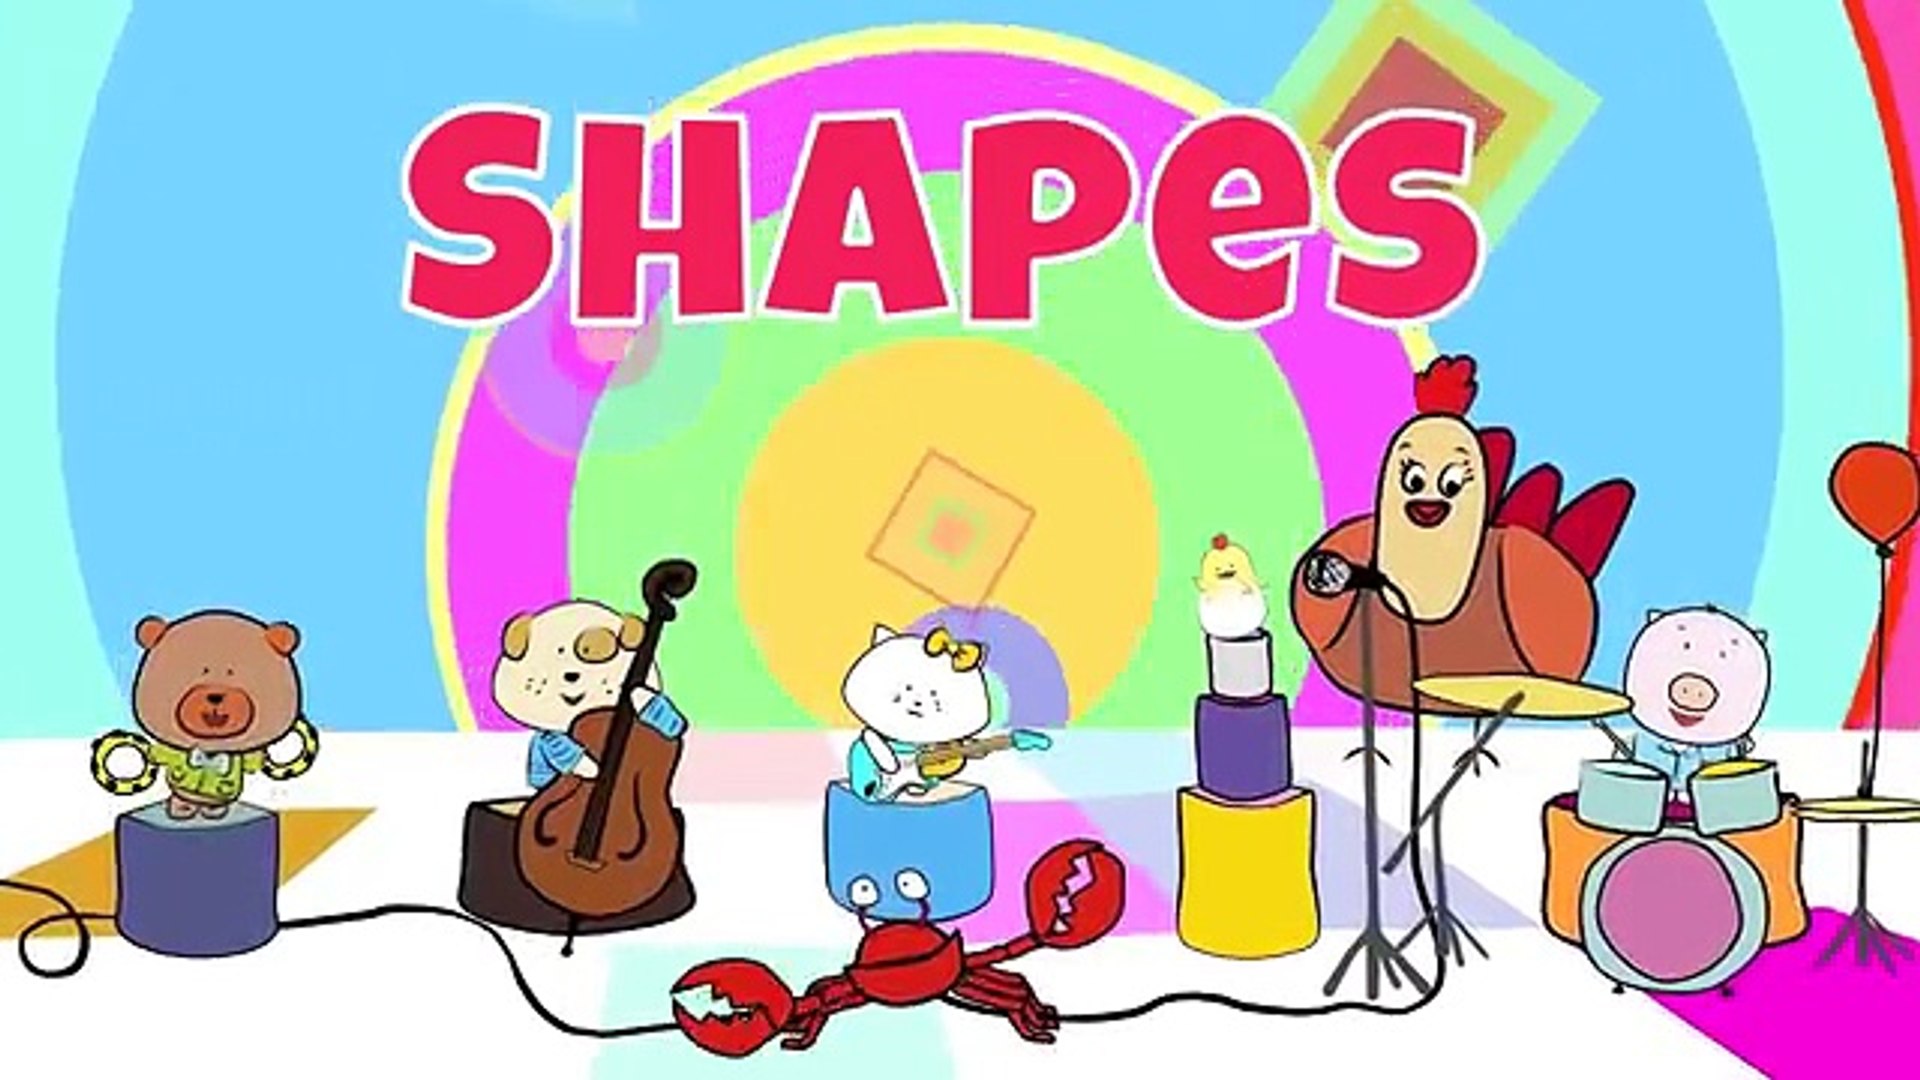 2D Shapes Song  Teaching 2D Shapes for Kids (Teacher-Made)